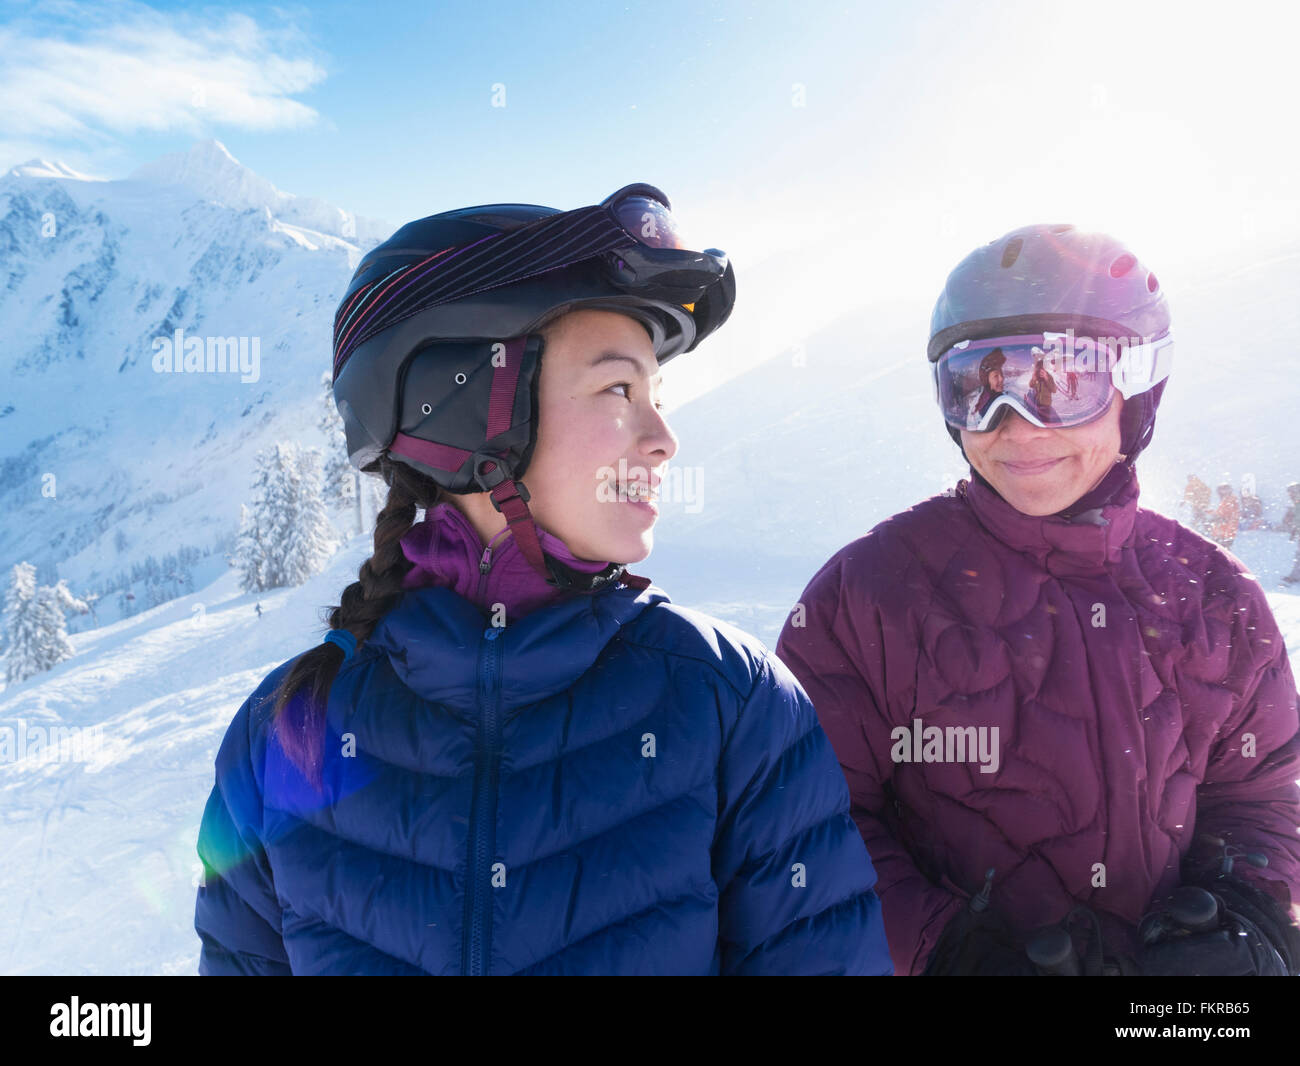 Mère et fille wearing ski gear on snowy mountain Banque D'Images